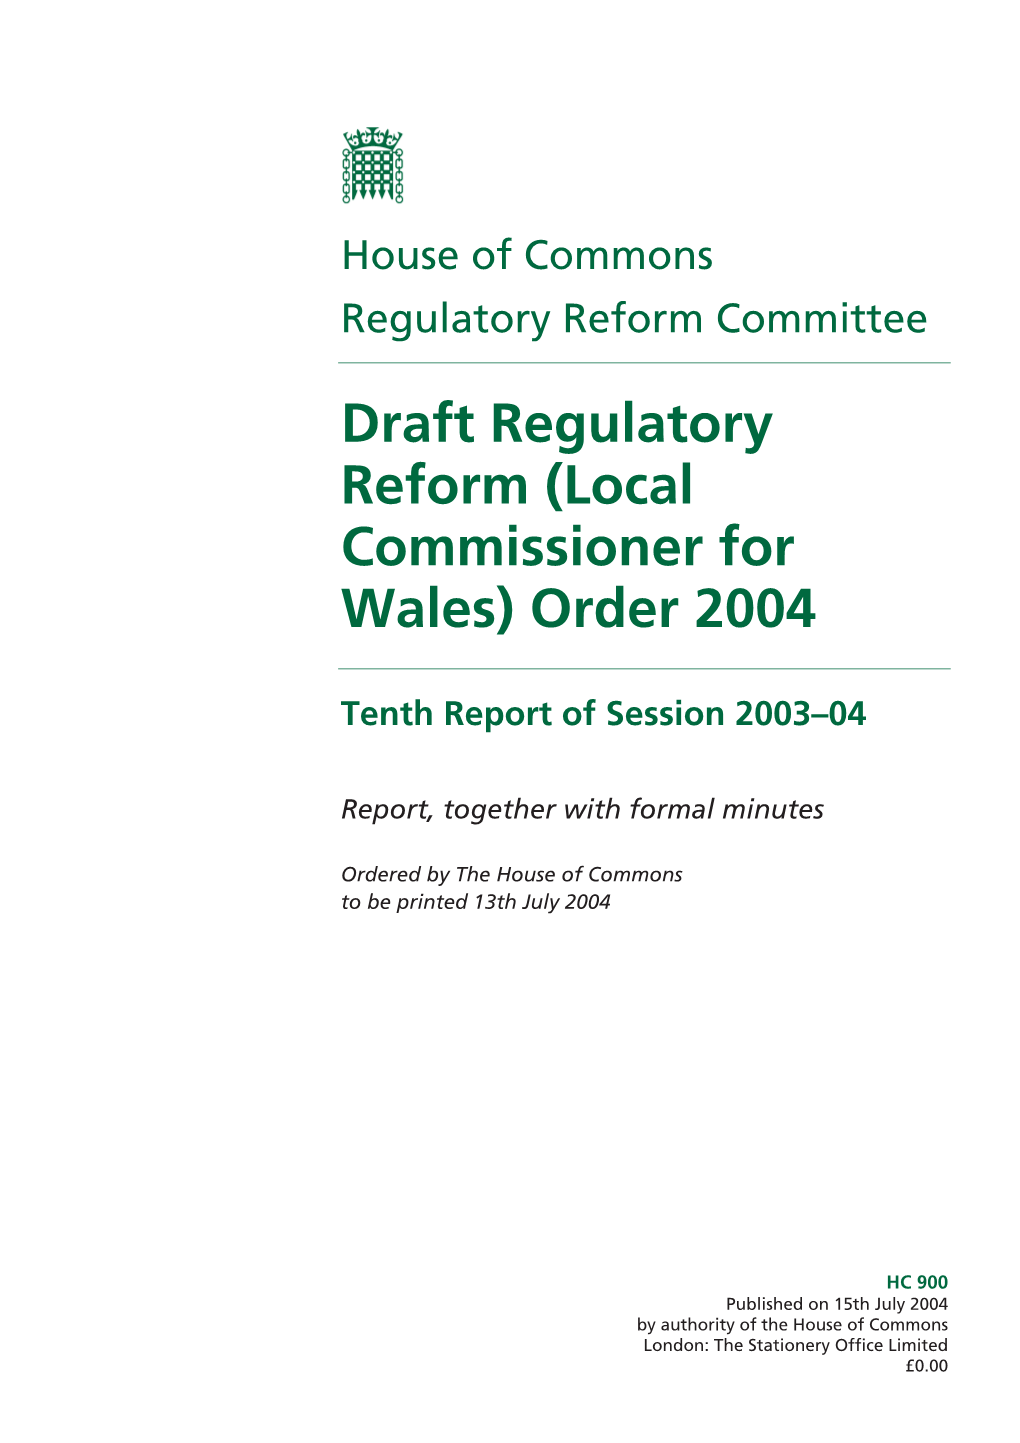 Draft Regulatory Reform (Local Commissioner for Wales) Order 2004